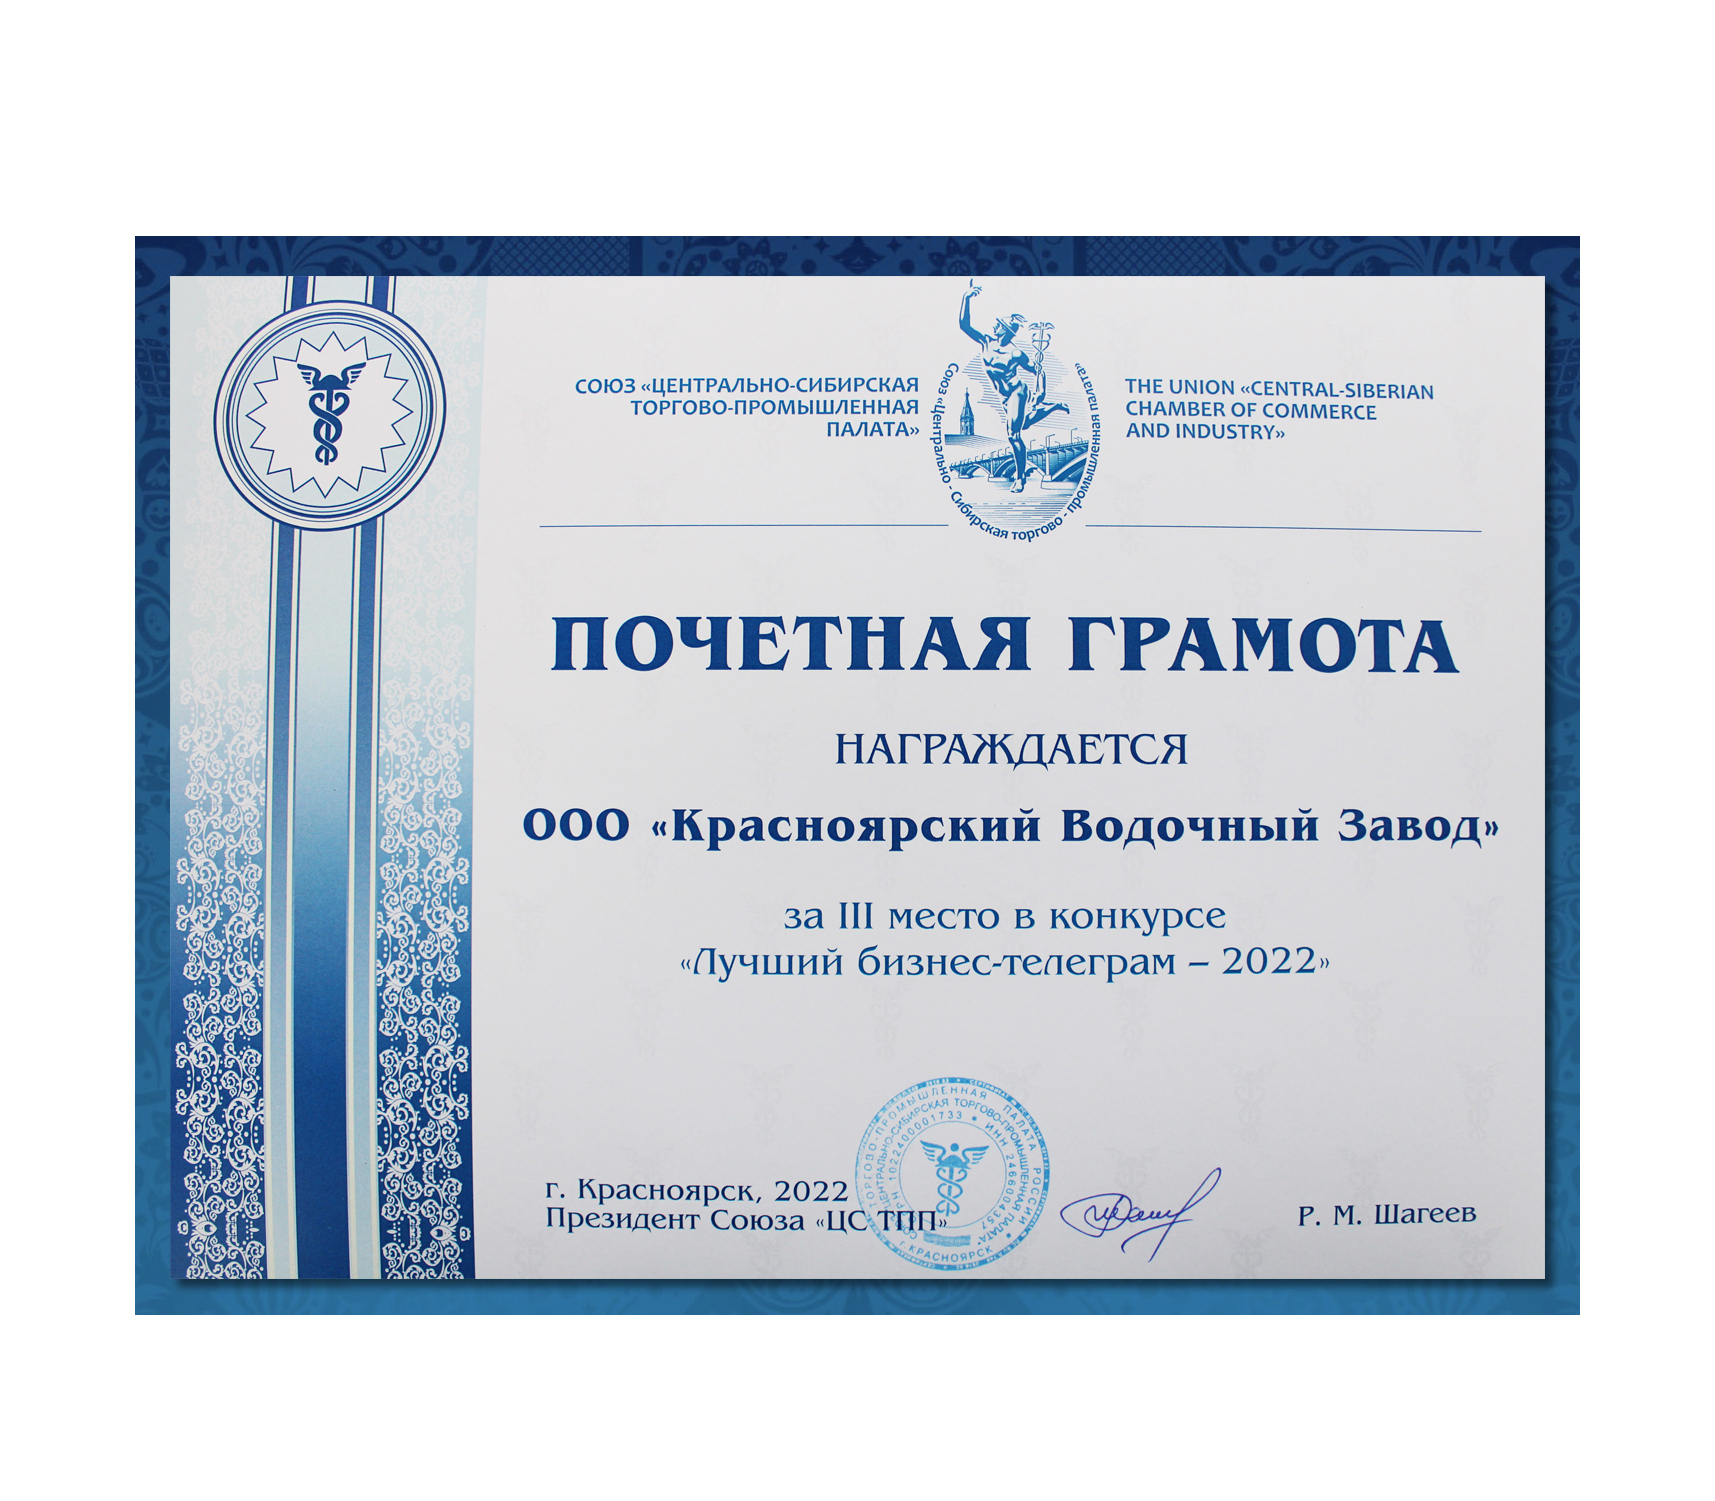 III место в конкурсе «Лучший бизнес-телеграм – 2022»